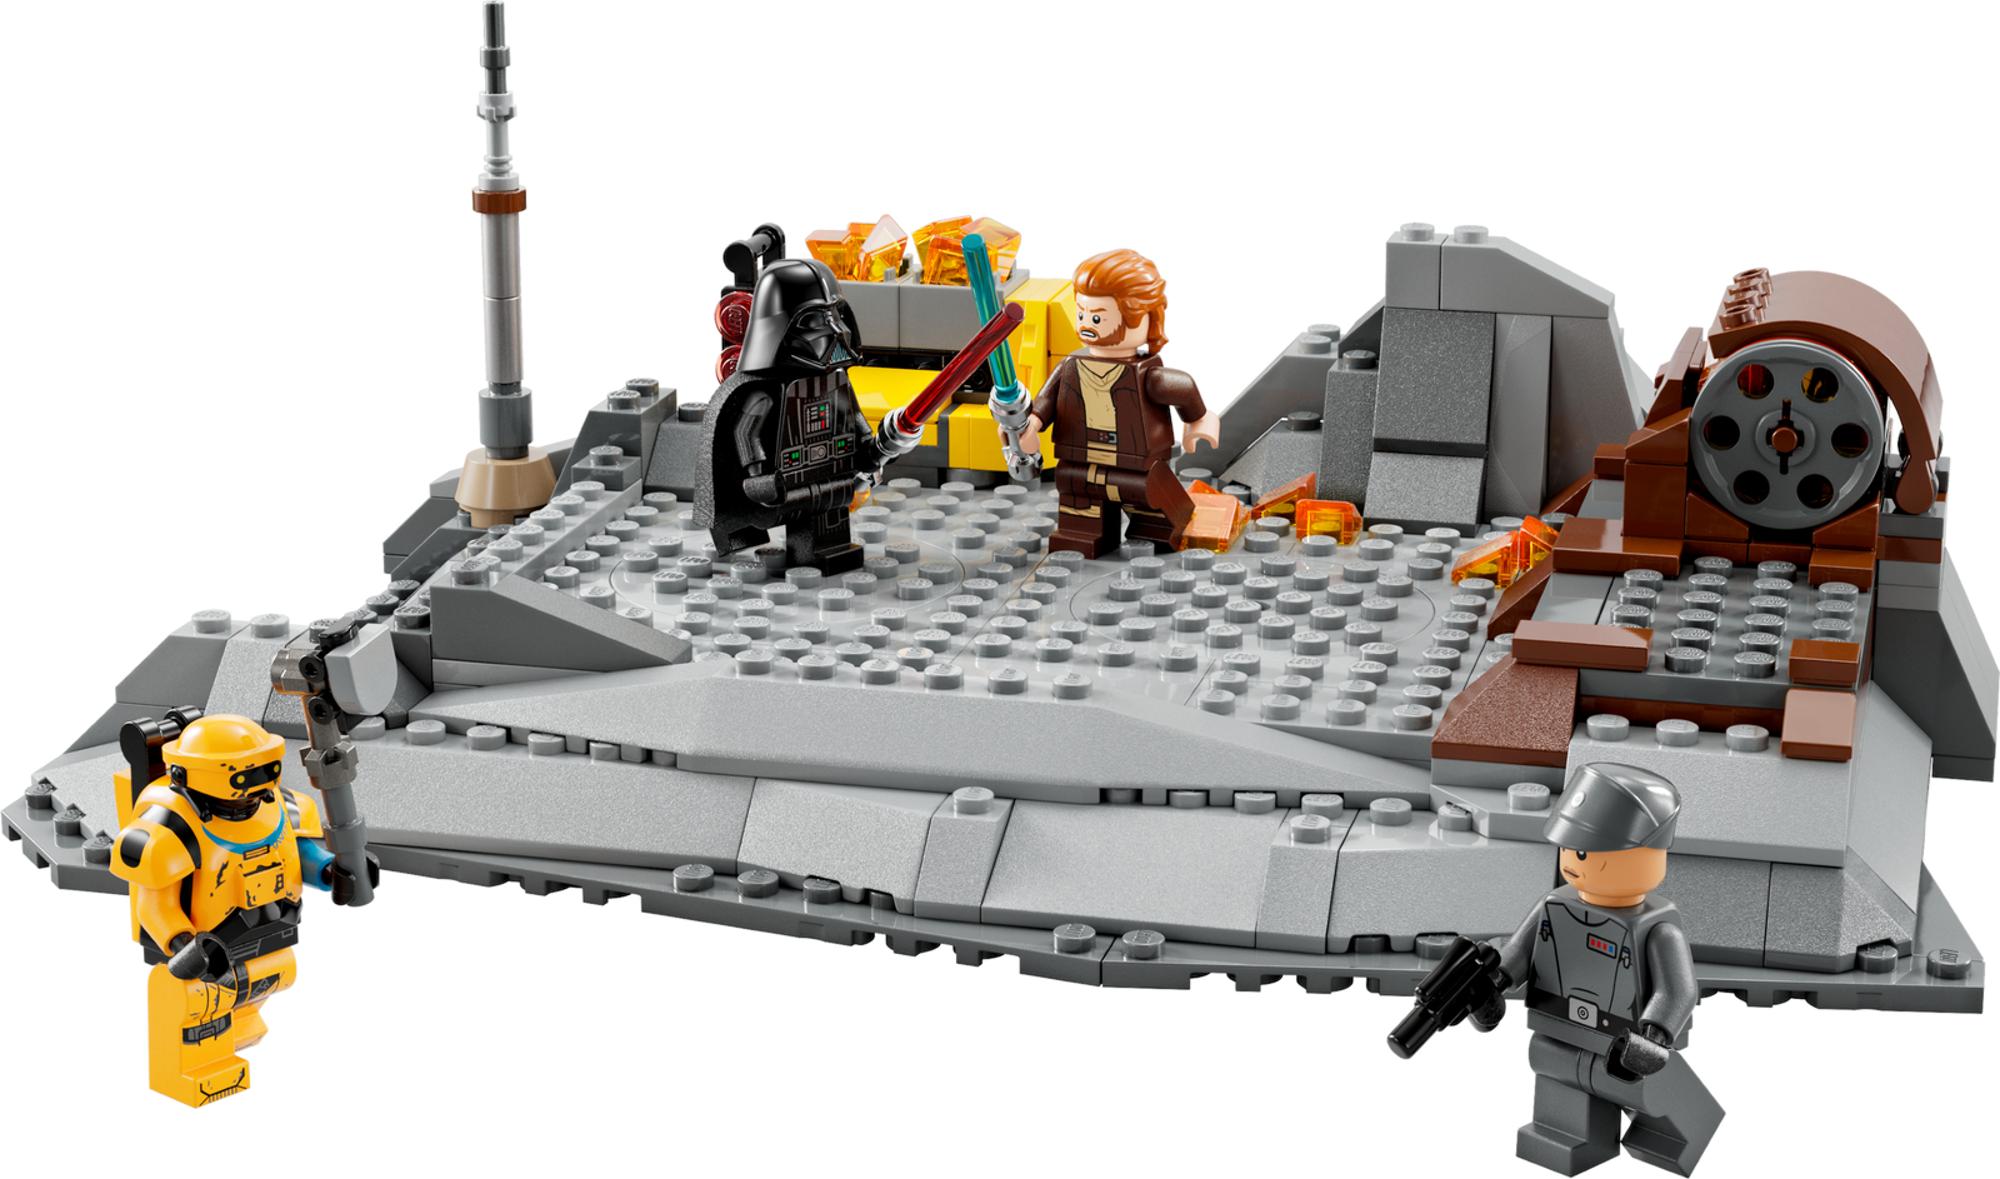 LEGO Star Wars - Obi-Wan Kenobi vs Darth Vader